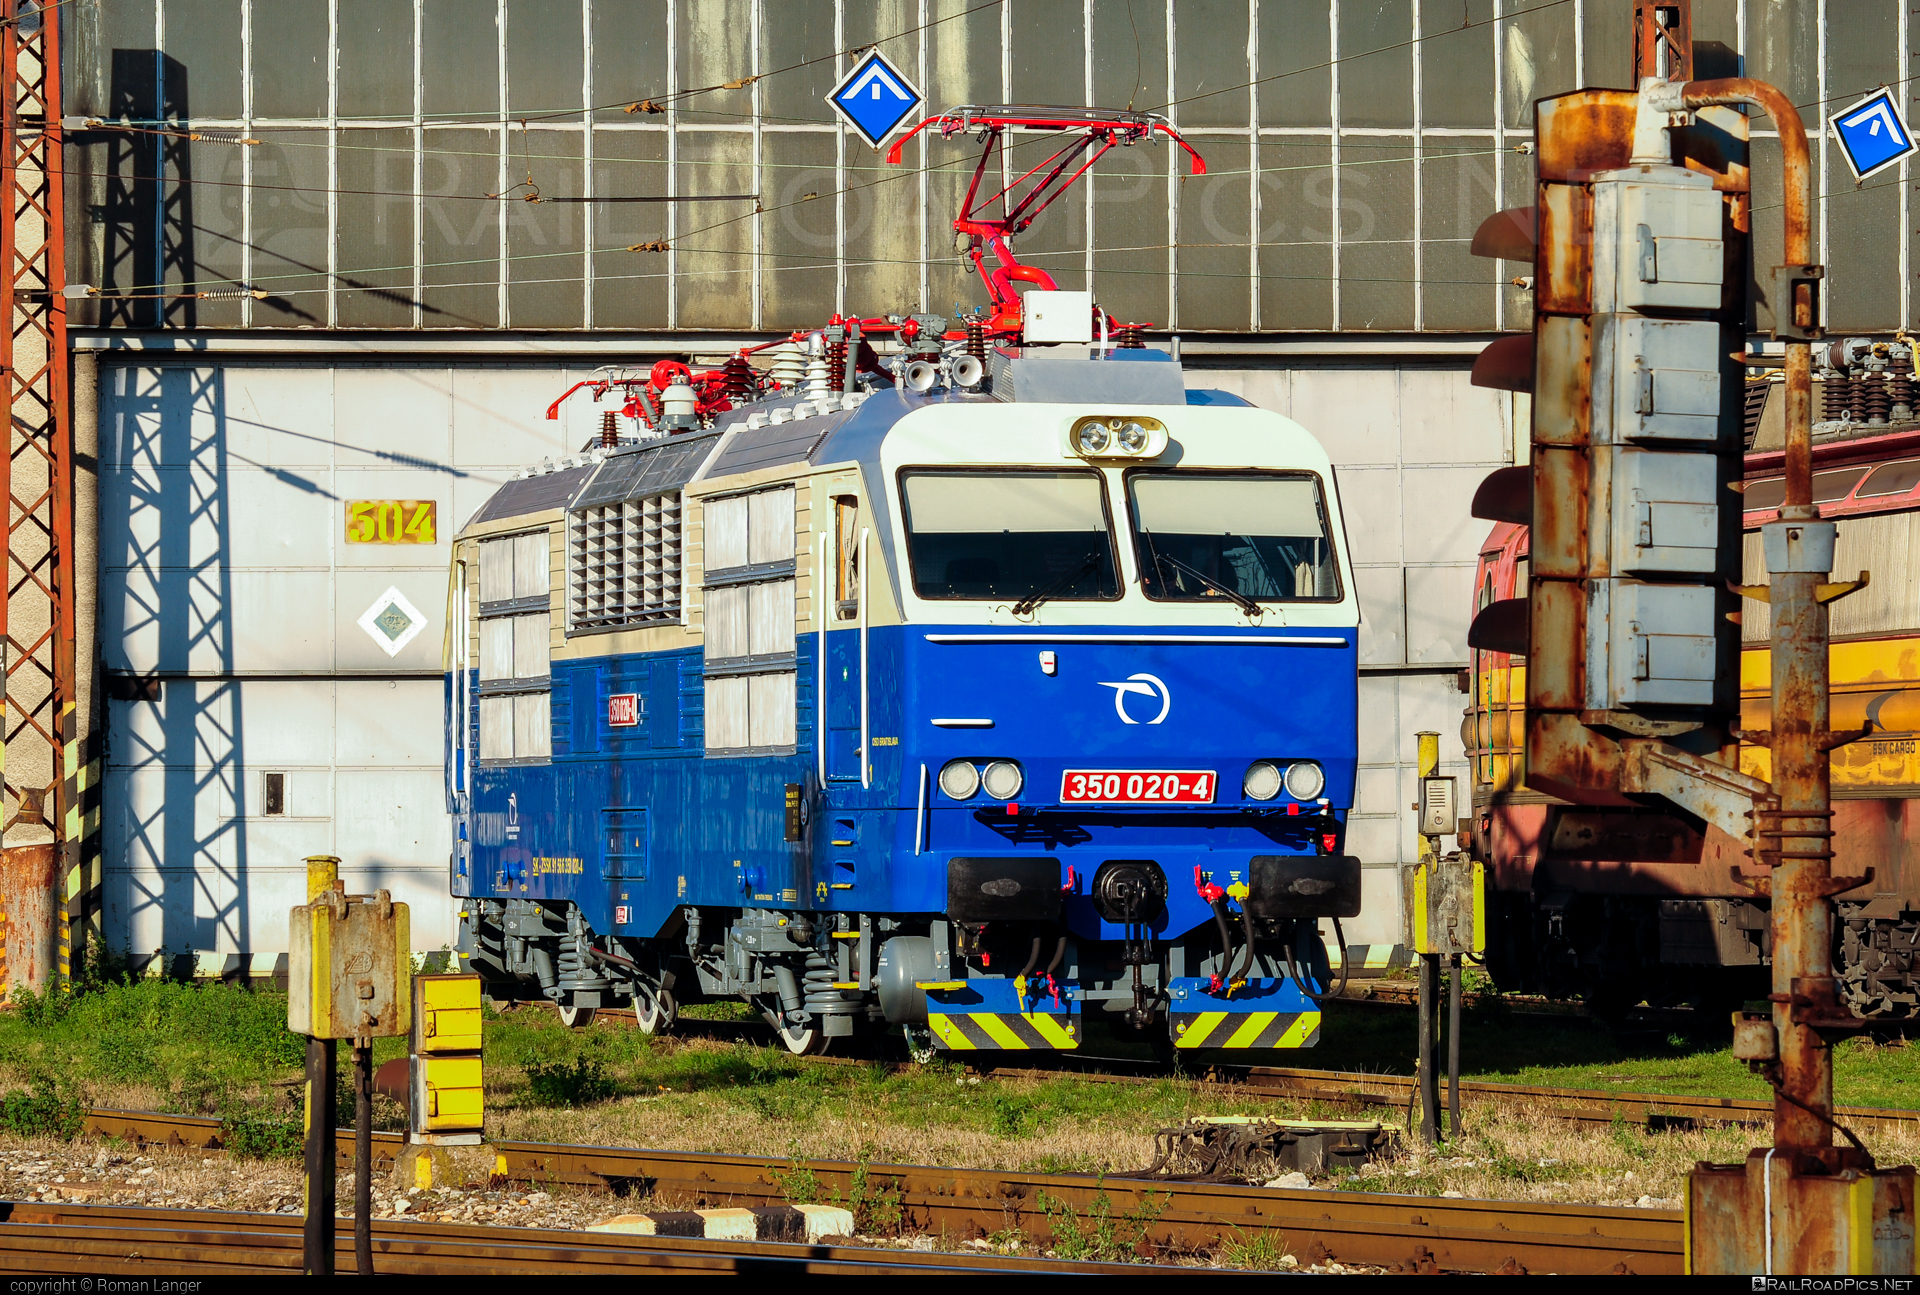 Škoda 55E - 350 020-4 operated by Železničná Spoločnost' Slovensko, a.s. #ZeleznicnaSpolocnostSlovensko #gorila #locomotive350 #skoda #skoda55e #zssk